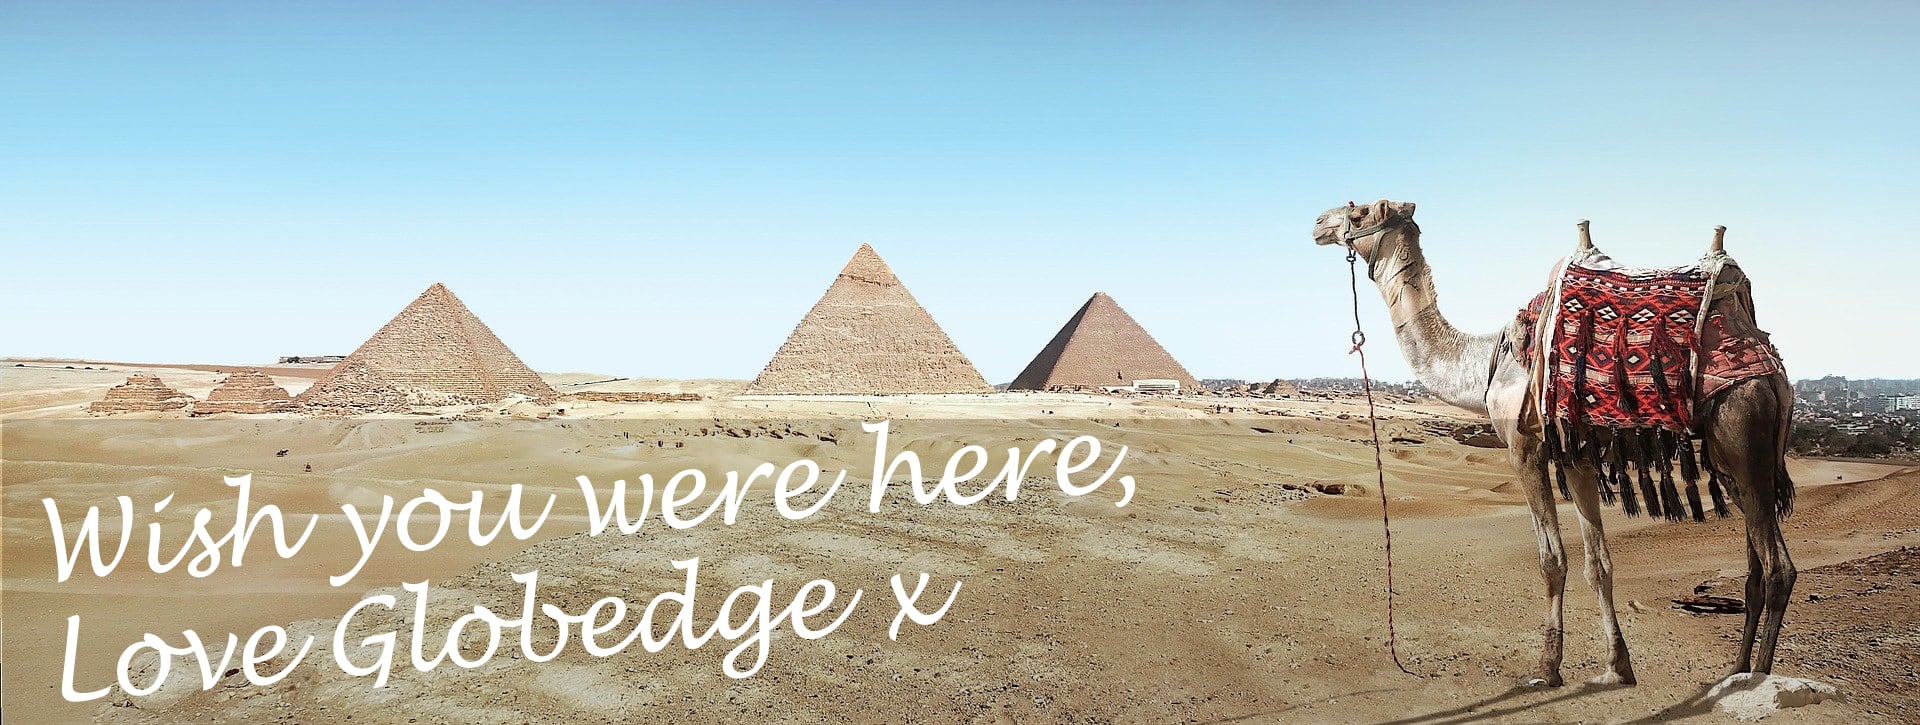 globedge-travel-egypt-desert-pyramids-camel-wish-you-were-here